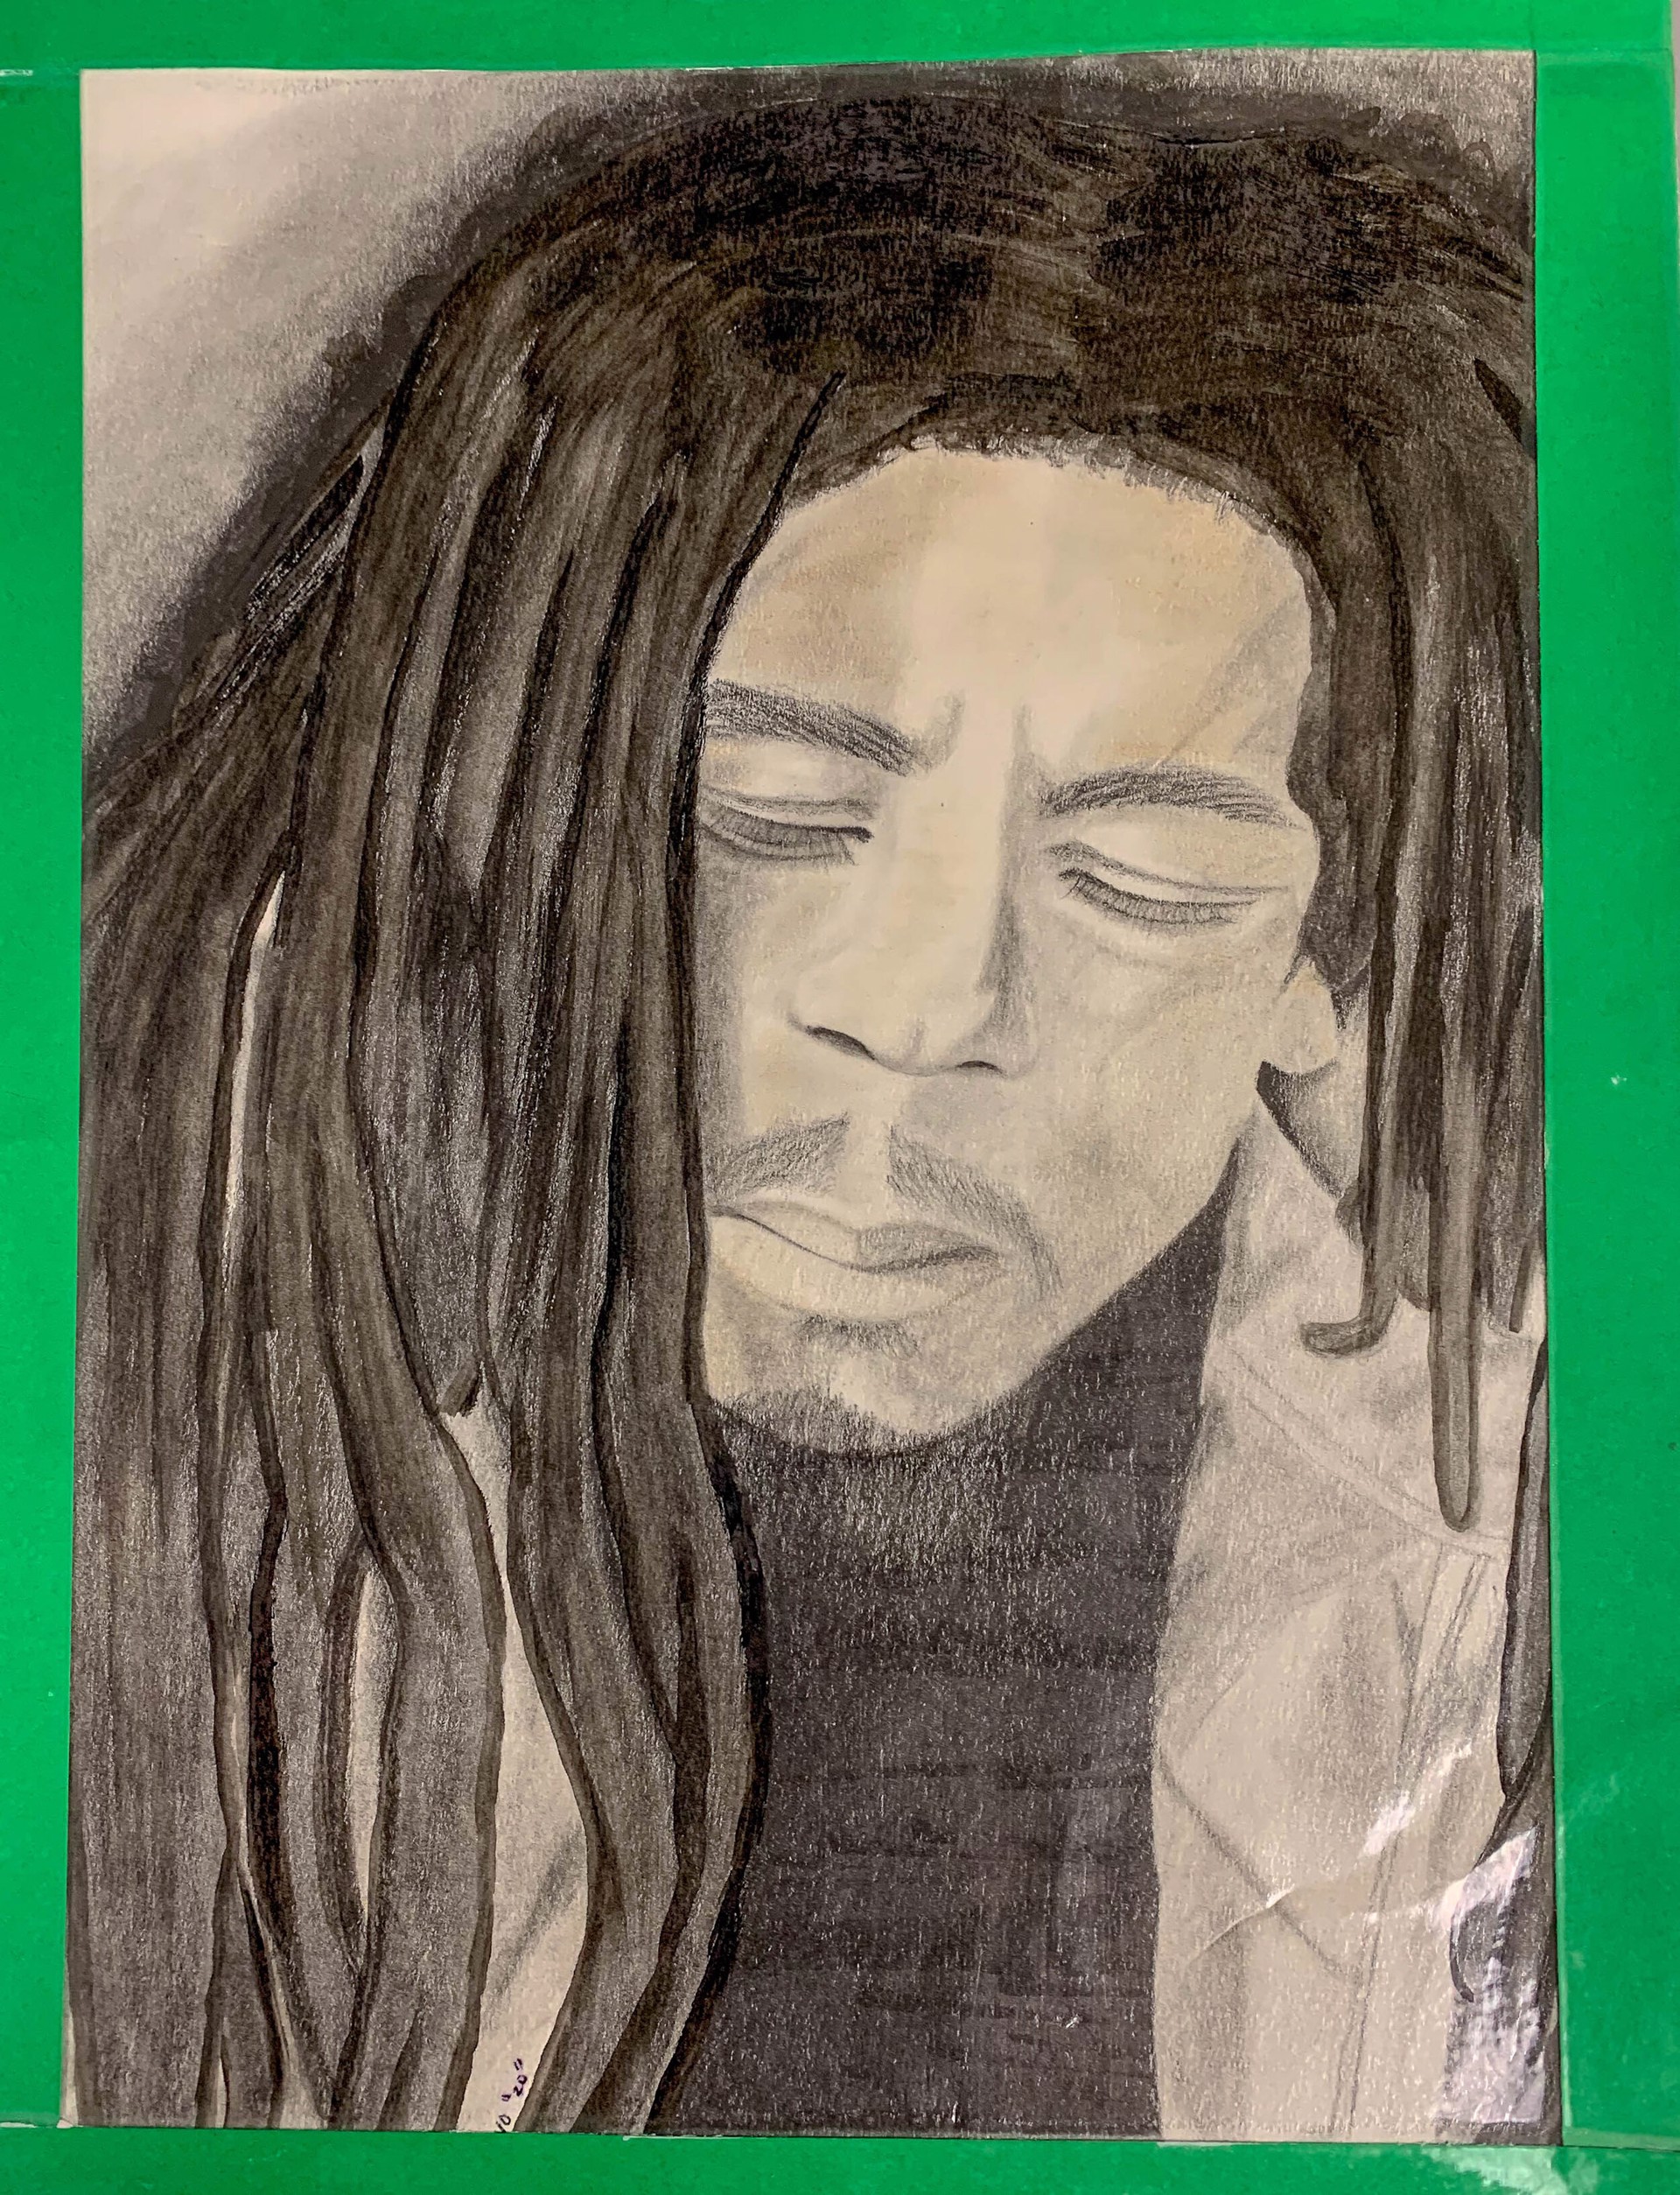 Bob Marley by Jeffrey Etheridge